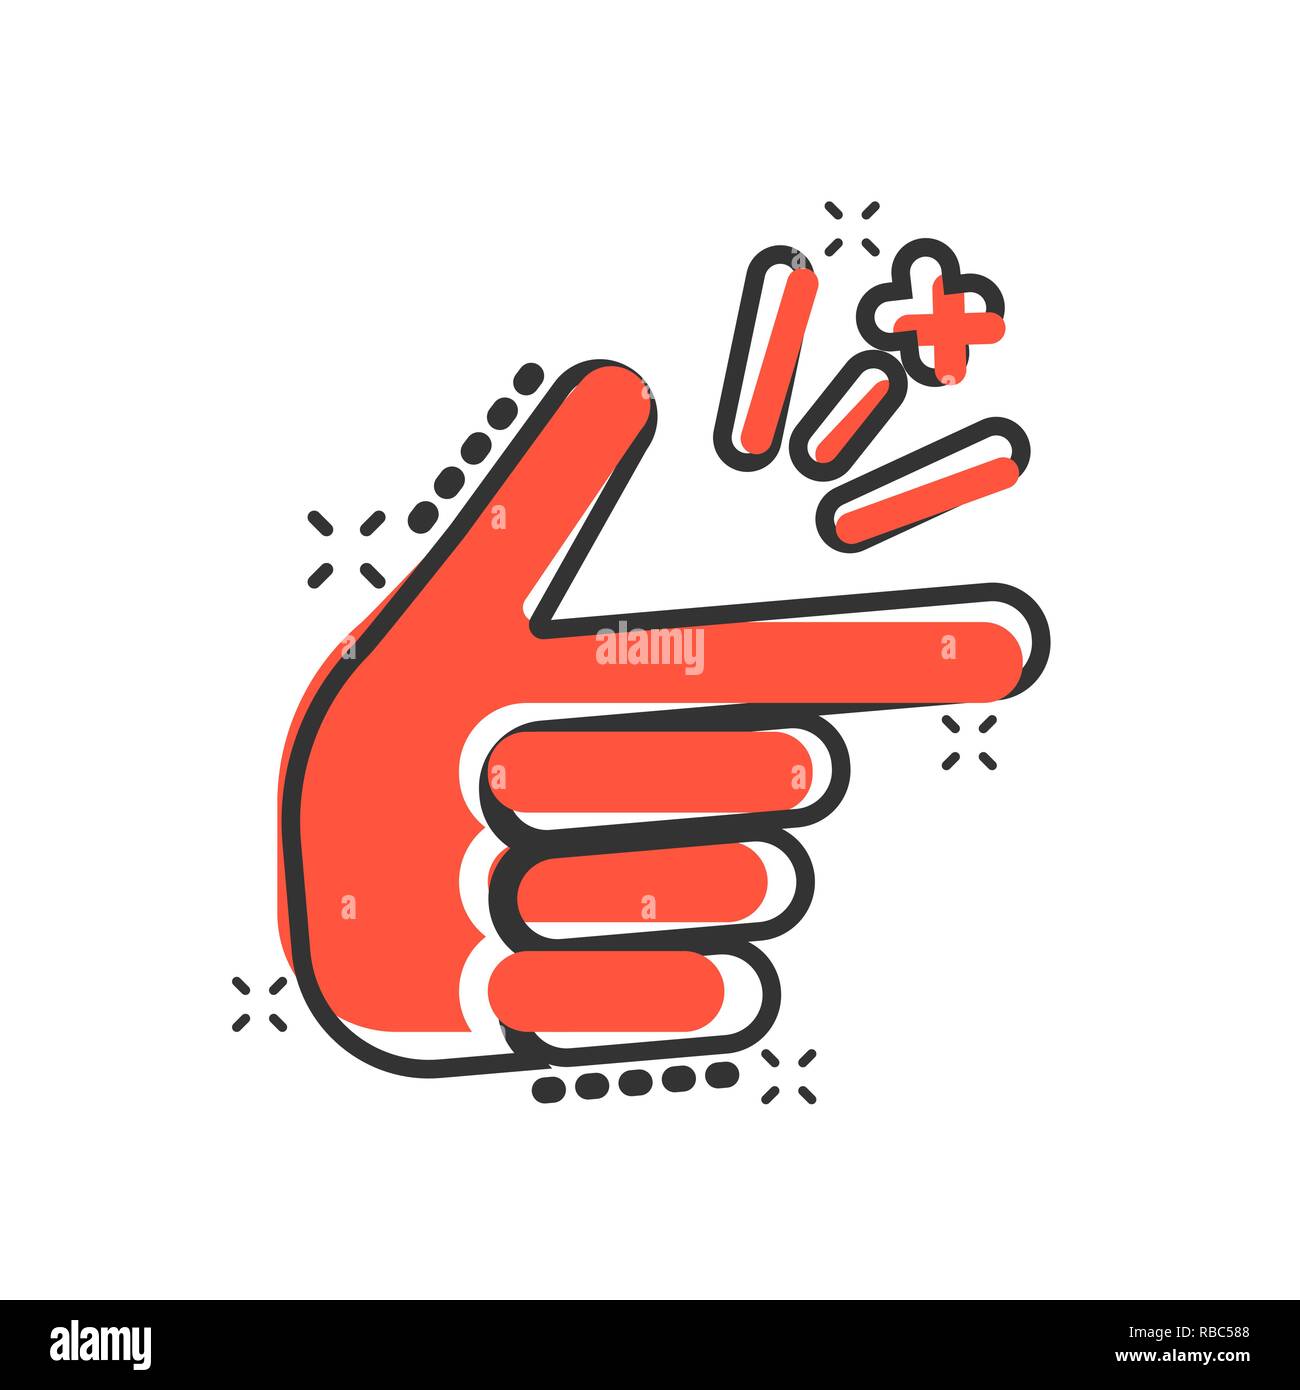 https://c8.alamy.com/comp/RBC588/finger-snap-icon-in-comic-style-fingers-expression-vector-cartoon-illustration-pictogram-snap-gesture-business-concept-splash-effect-RBC588.jpg